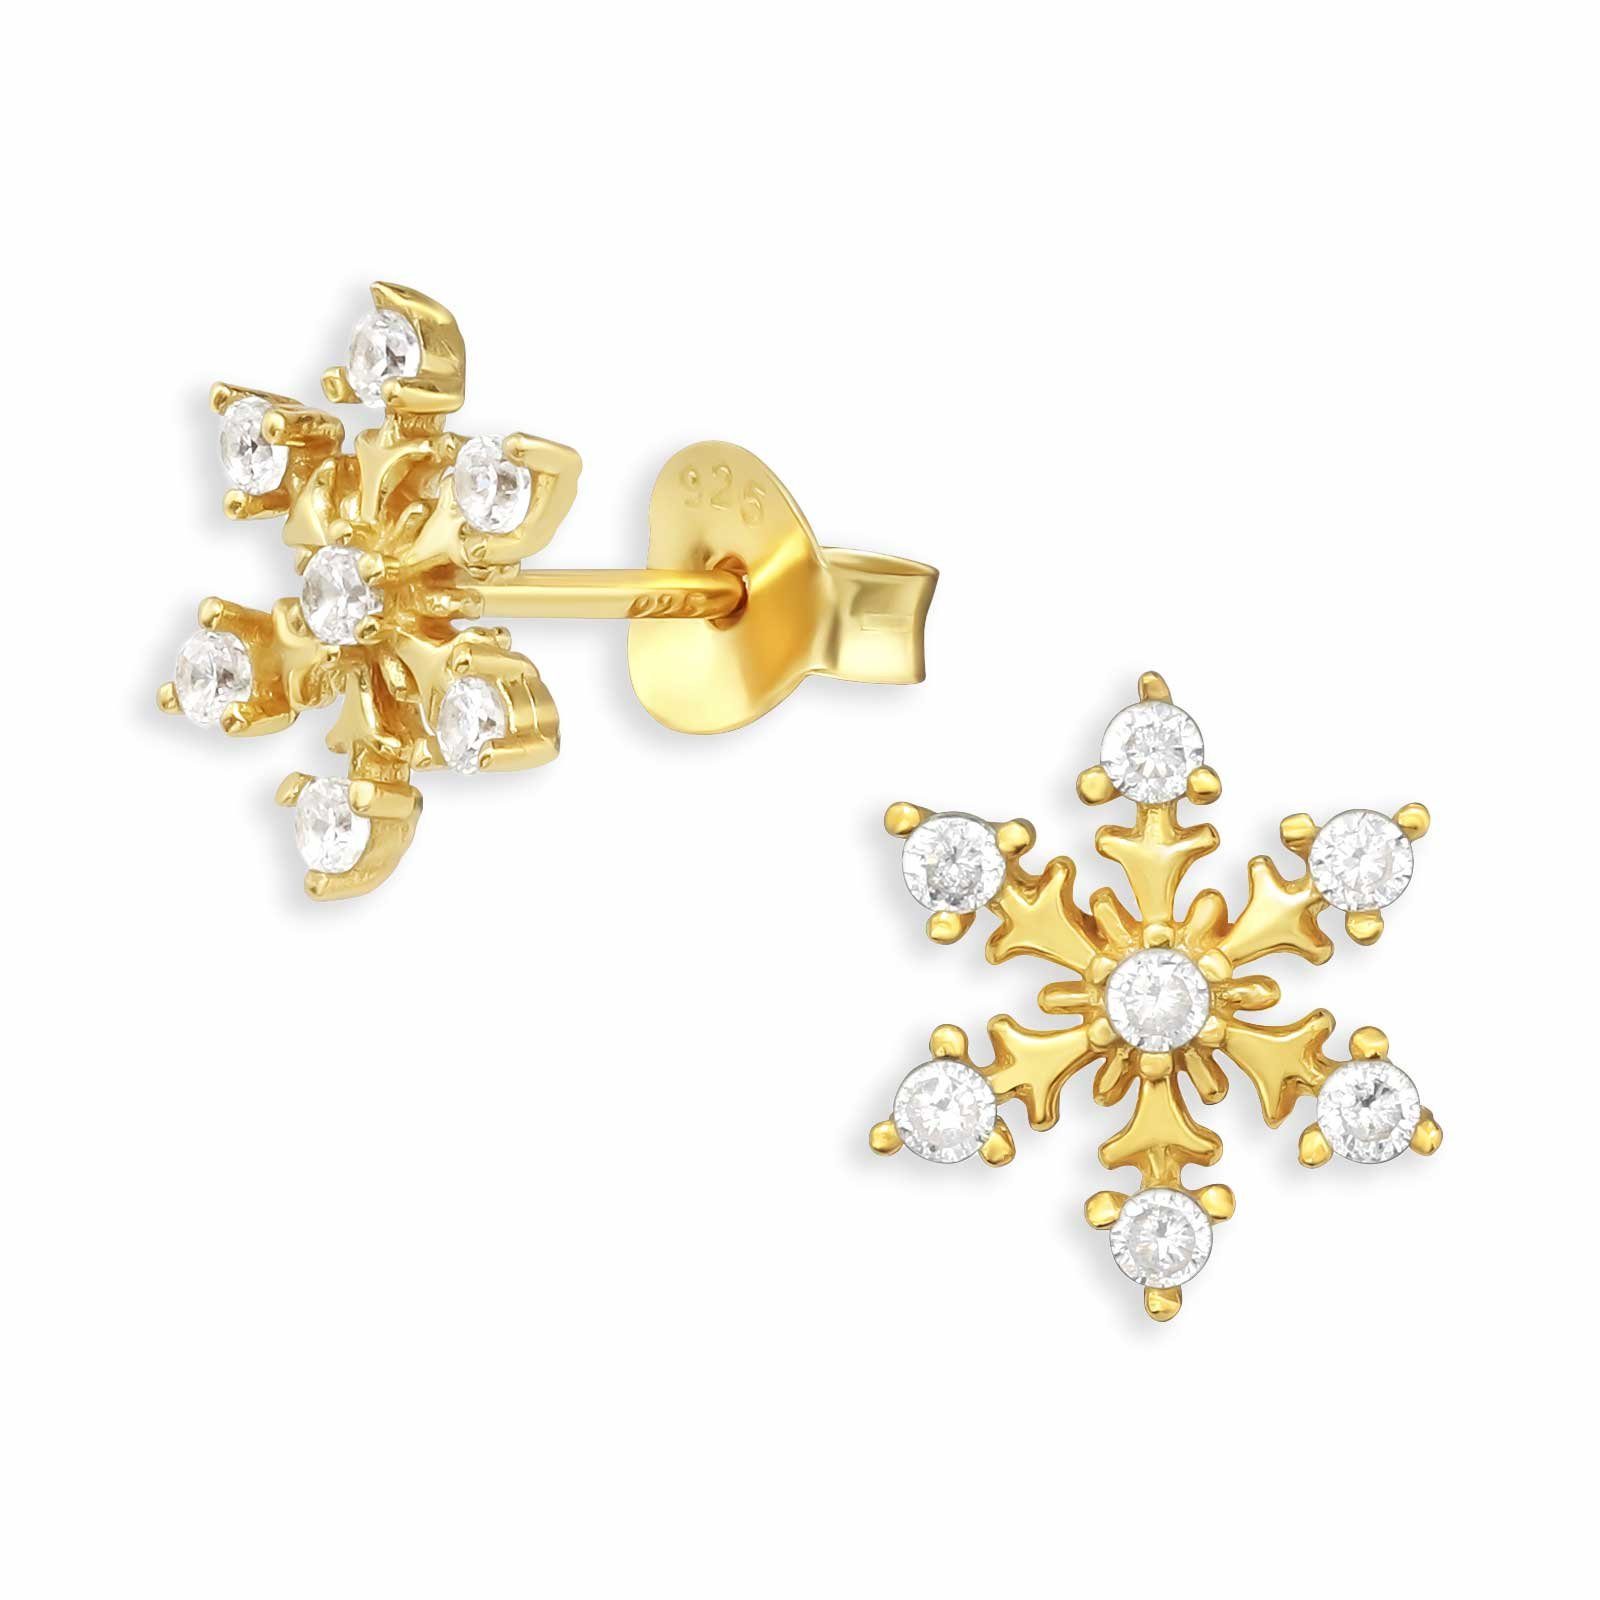 Monkimau Paar Ohrstecker Ohrringe Schneeflocken aus Silber Gold plattiert 925 (Packung)